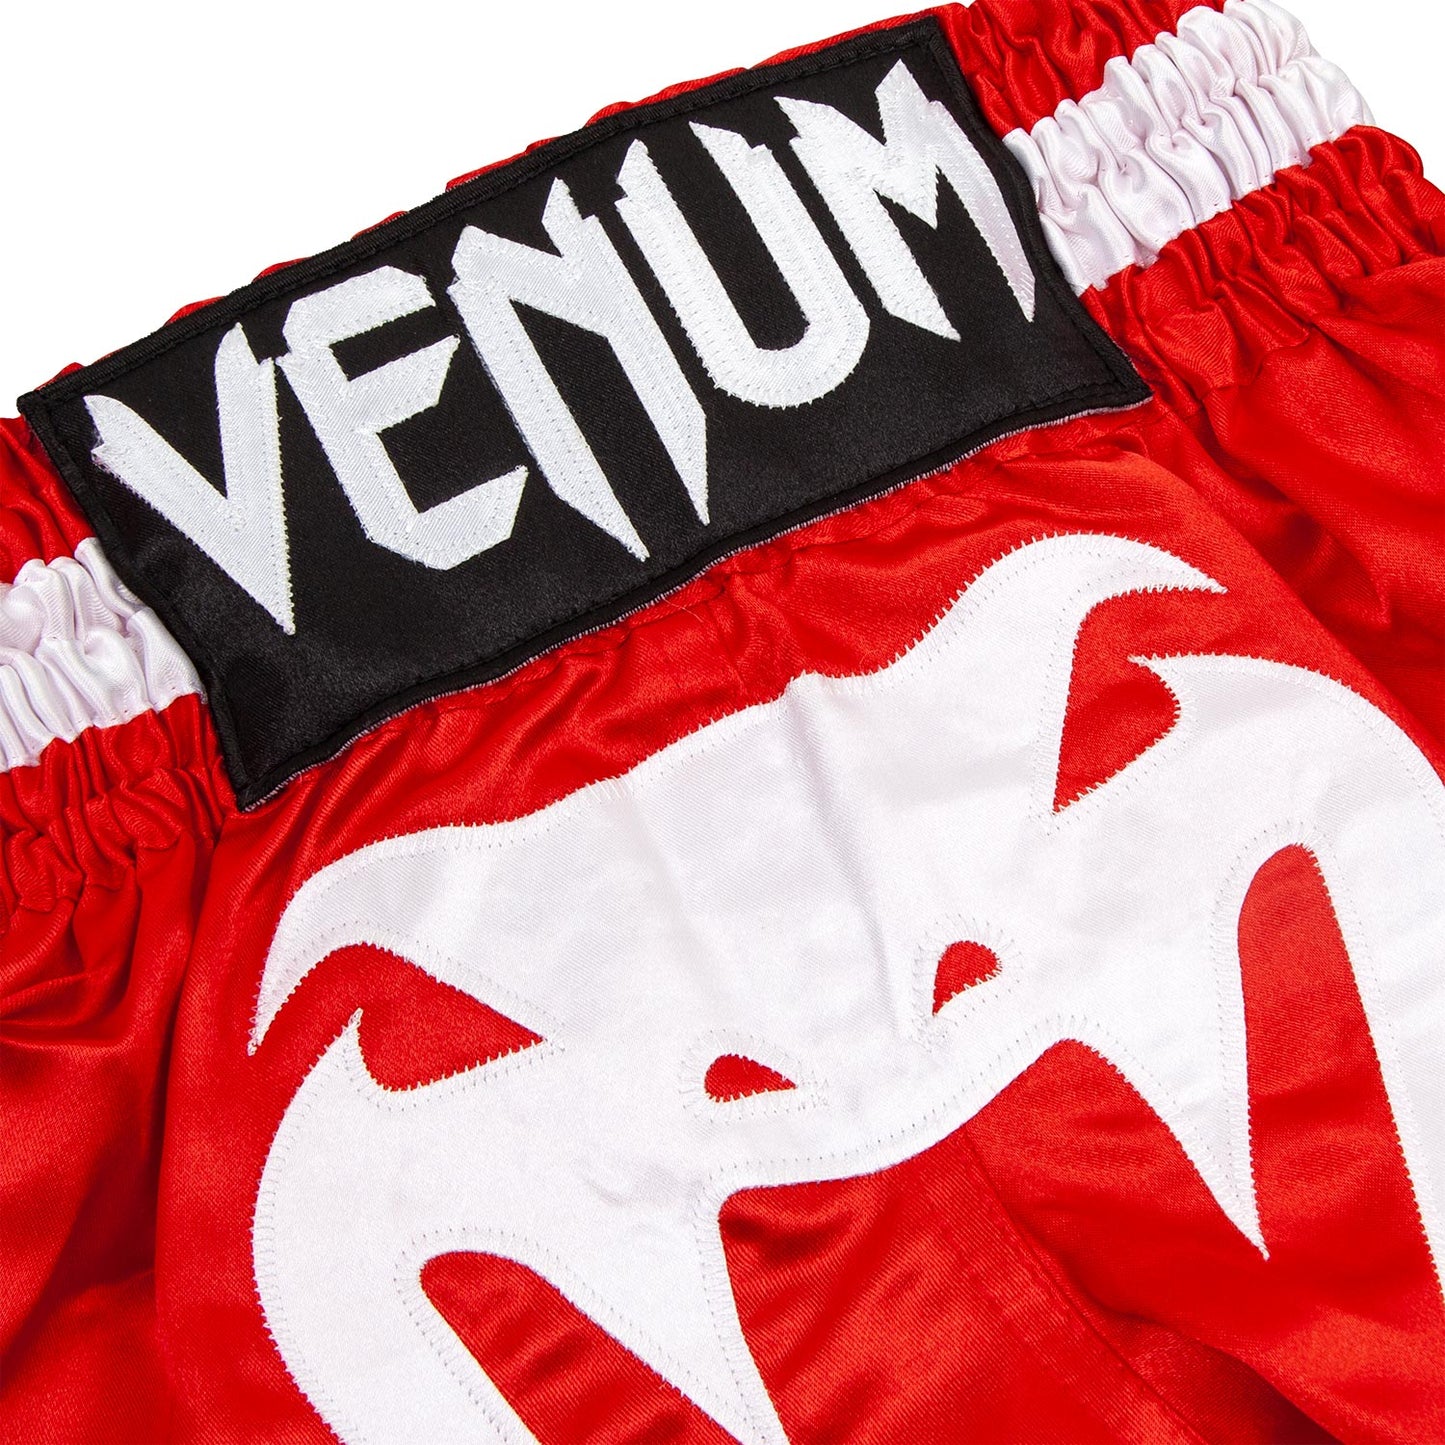 Venum Bangkok Inferno Muay Thai Shorts - Kinder - Rot/Weiß